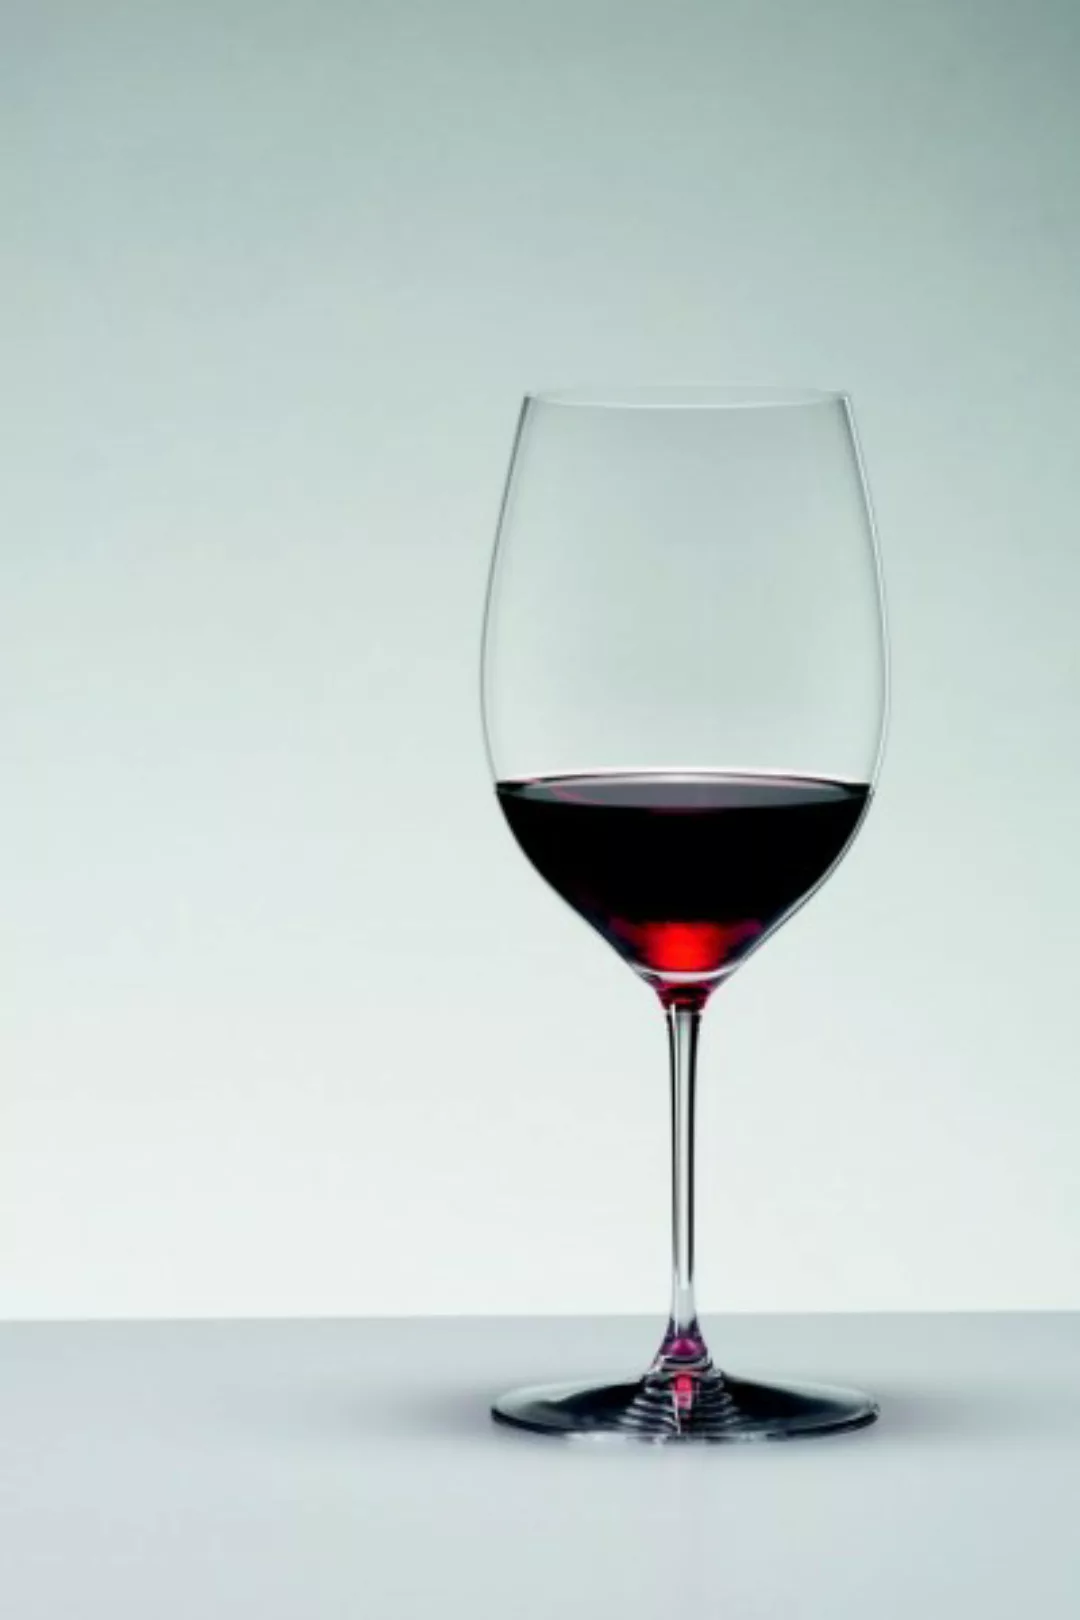 RIEDEL THE WINE GLASS COMPANY Rotweinglas »Veritas«, (Set, 2 tlg.) günstig online kaufen